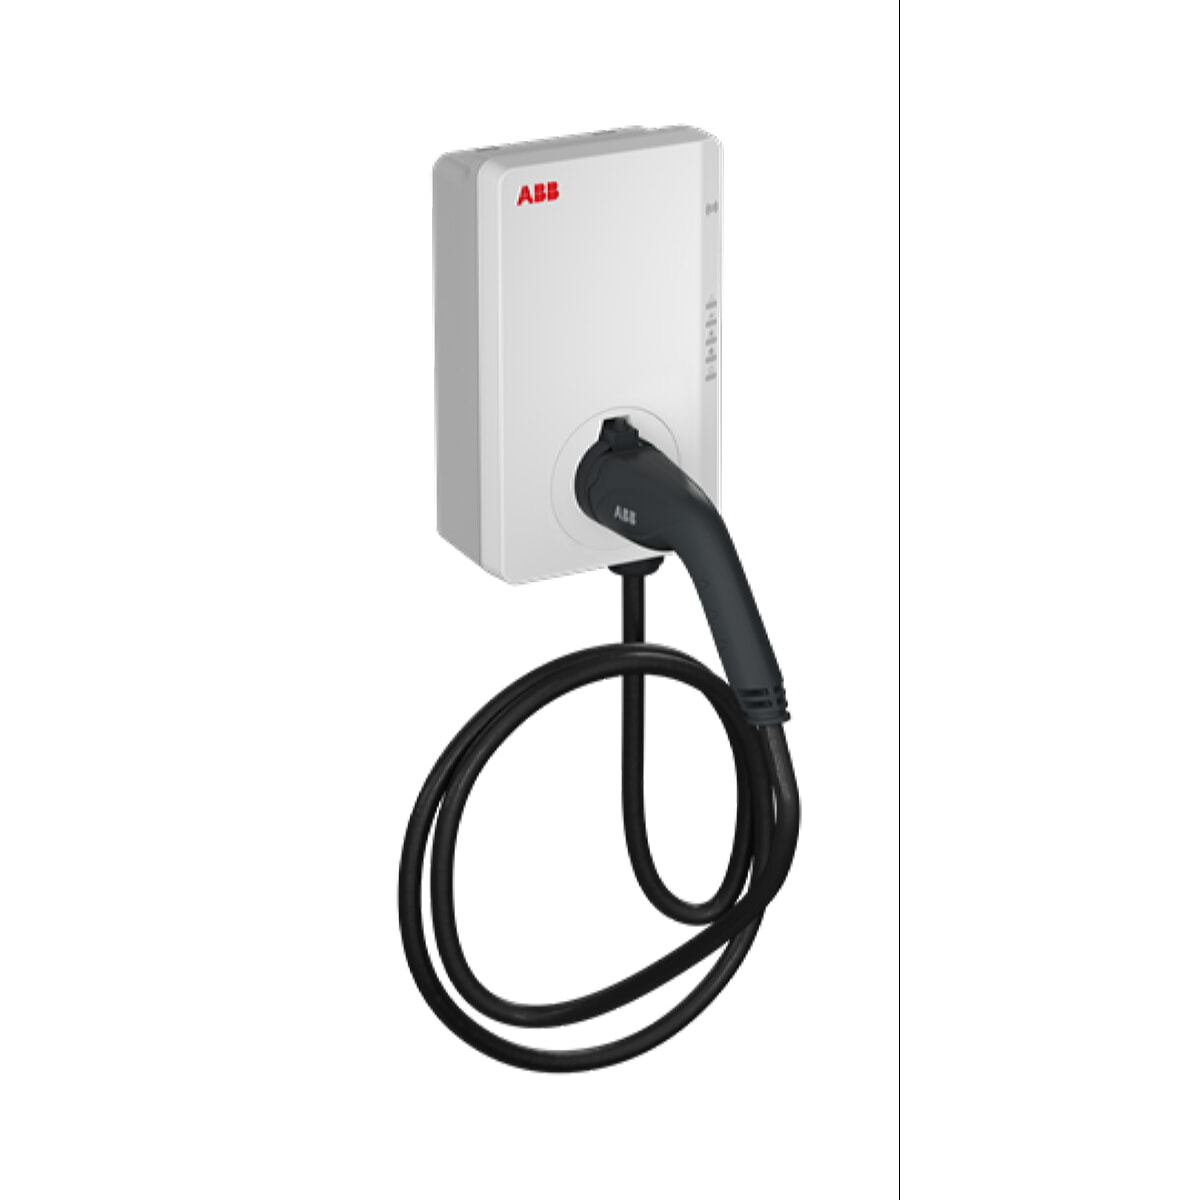 ABB Stotz-Kontakt wall charging station TAC-W11-G5-R-0 Terra AC 5m type 2 charging station.